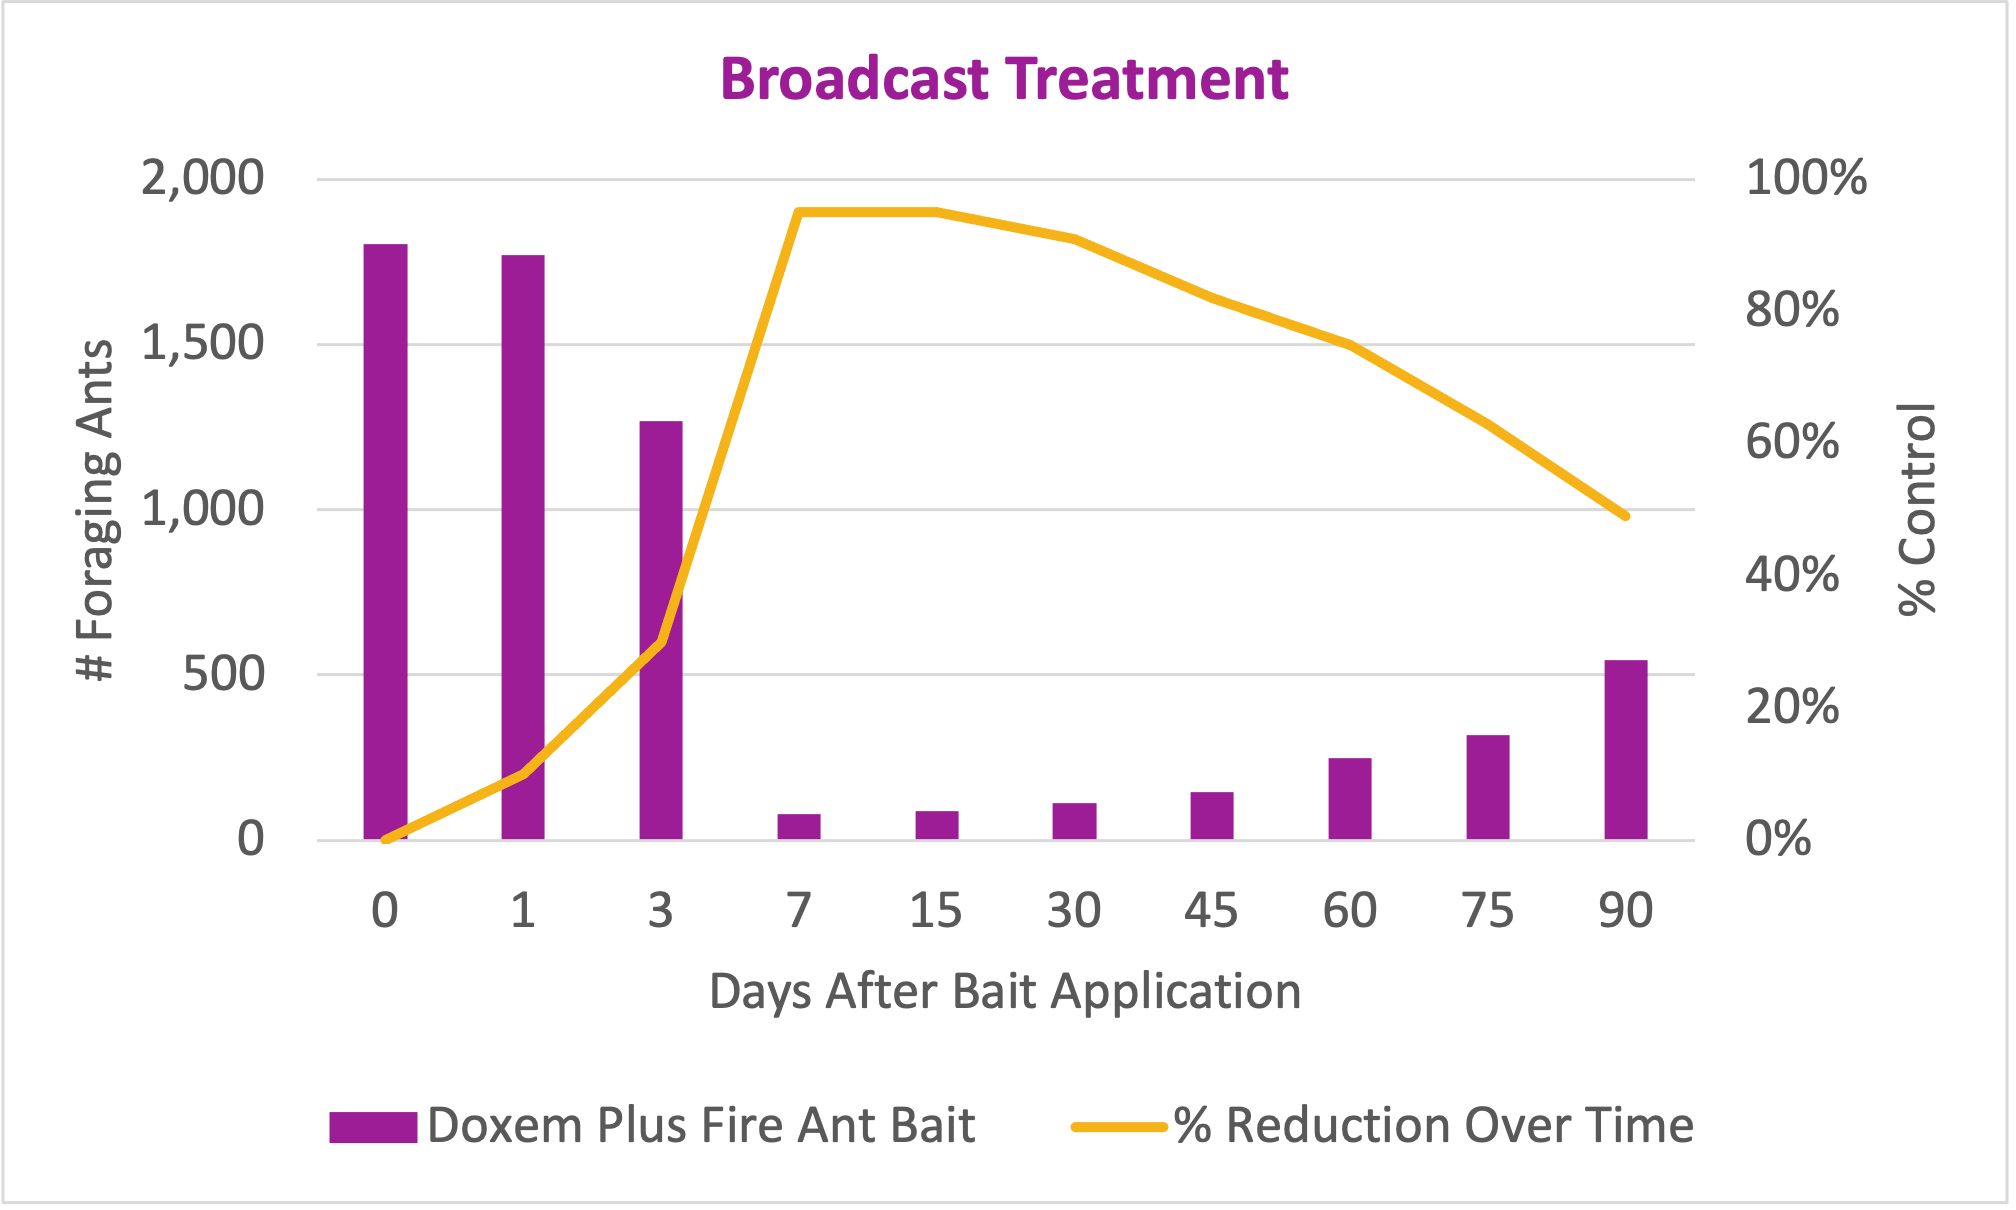 Doxem FAB broadcast trtmnt graph